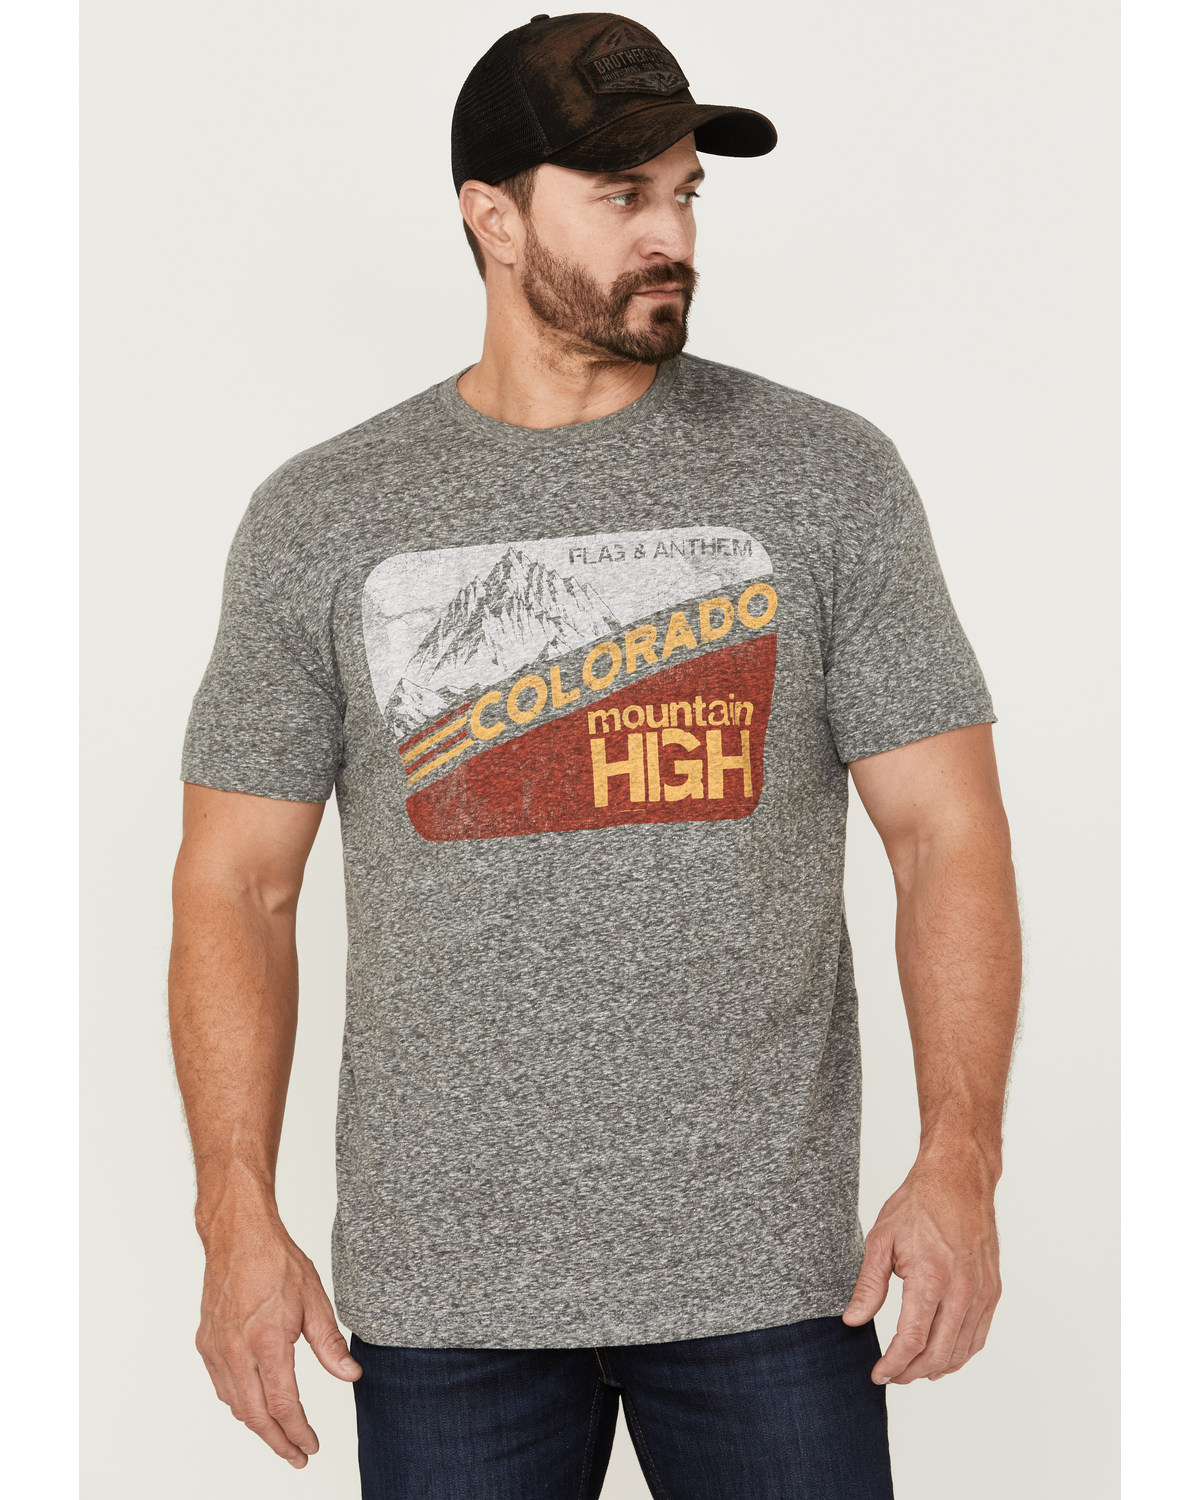 Flag & Anthem Men's Colorado Mountain High Graphic T-Shirt